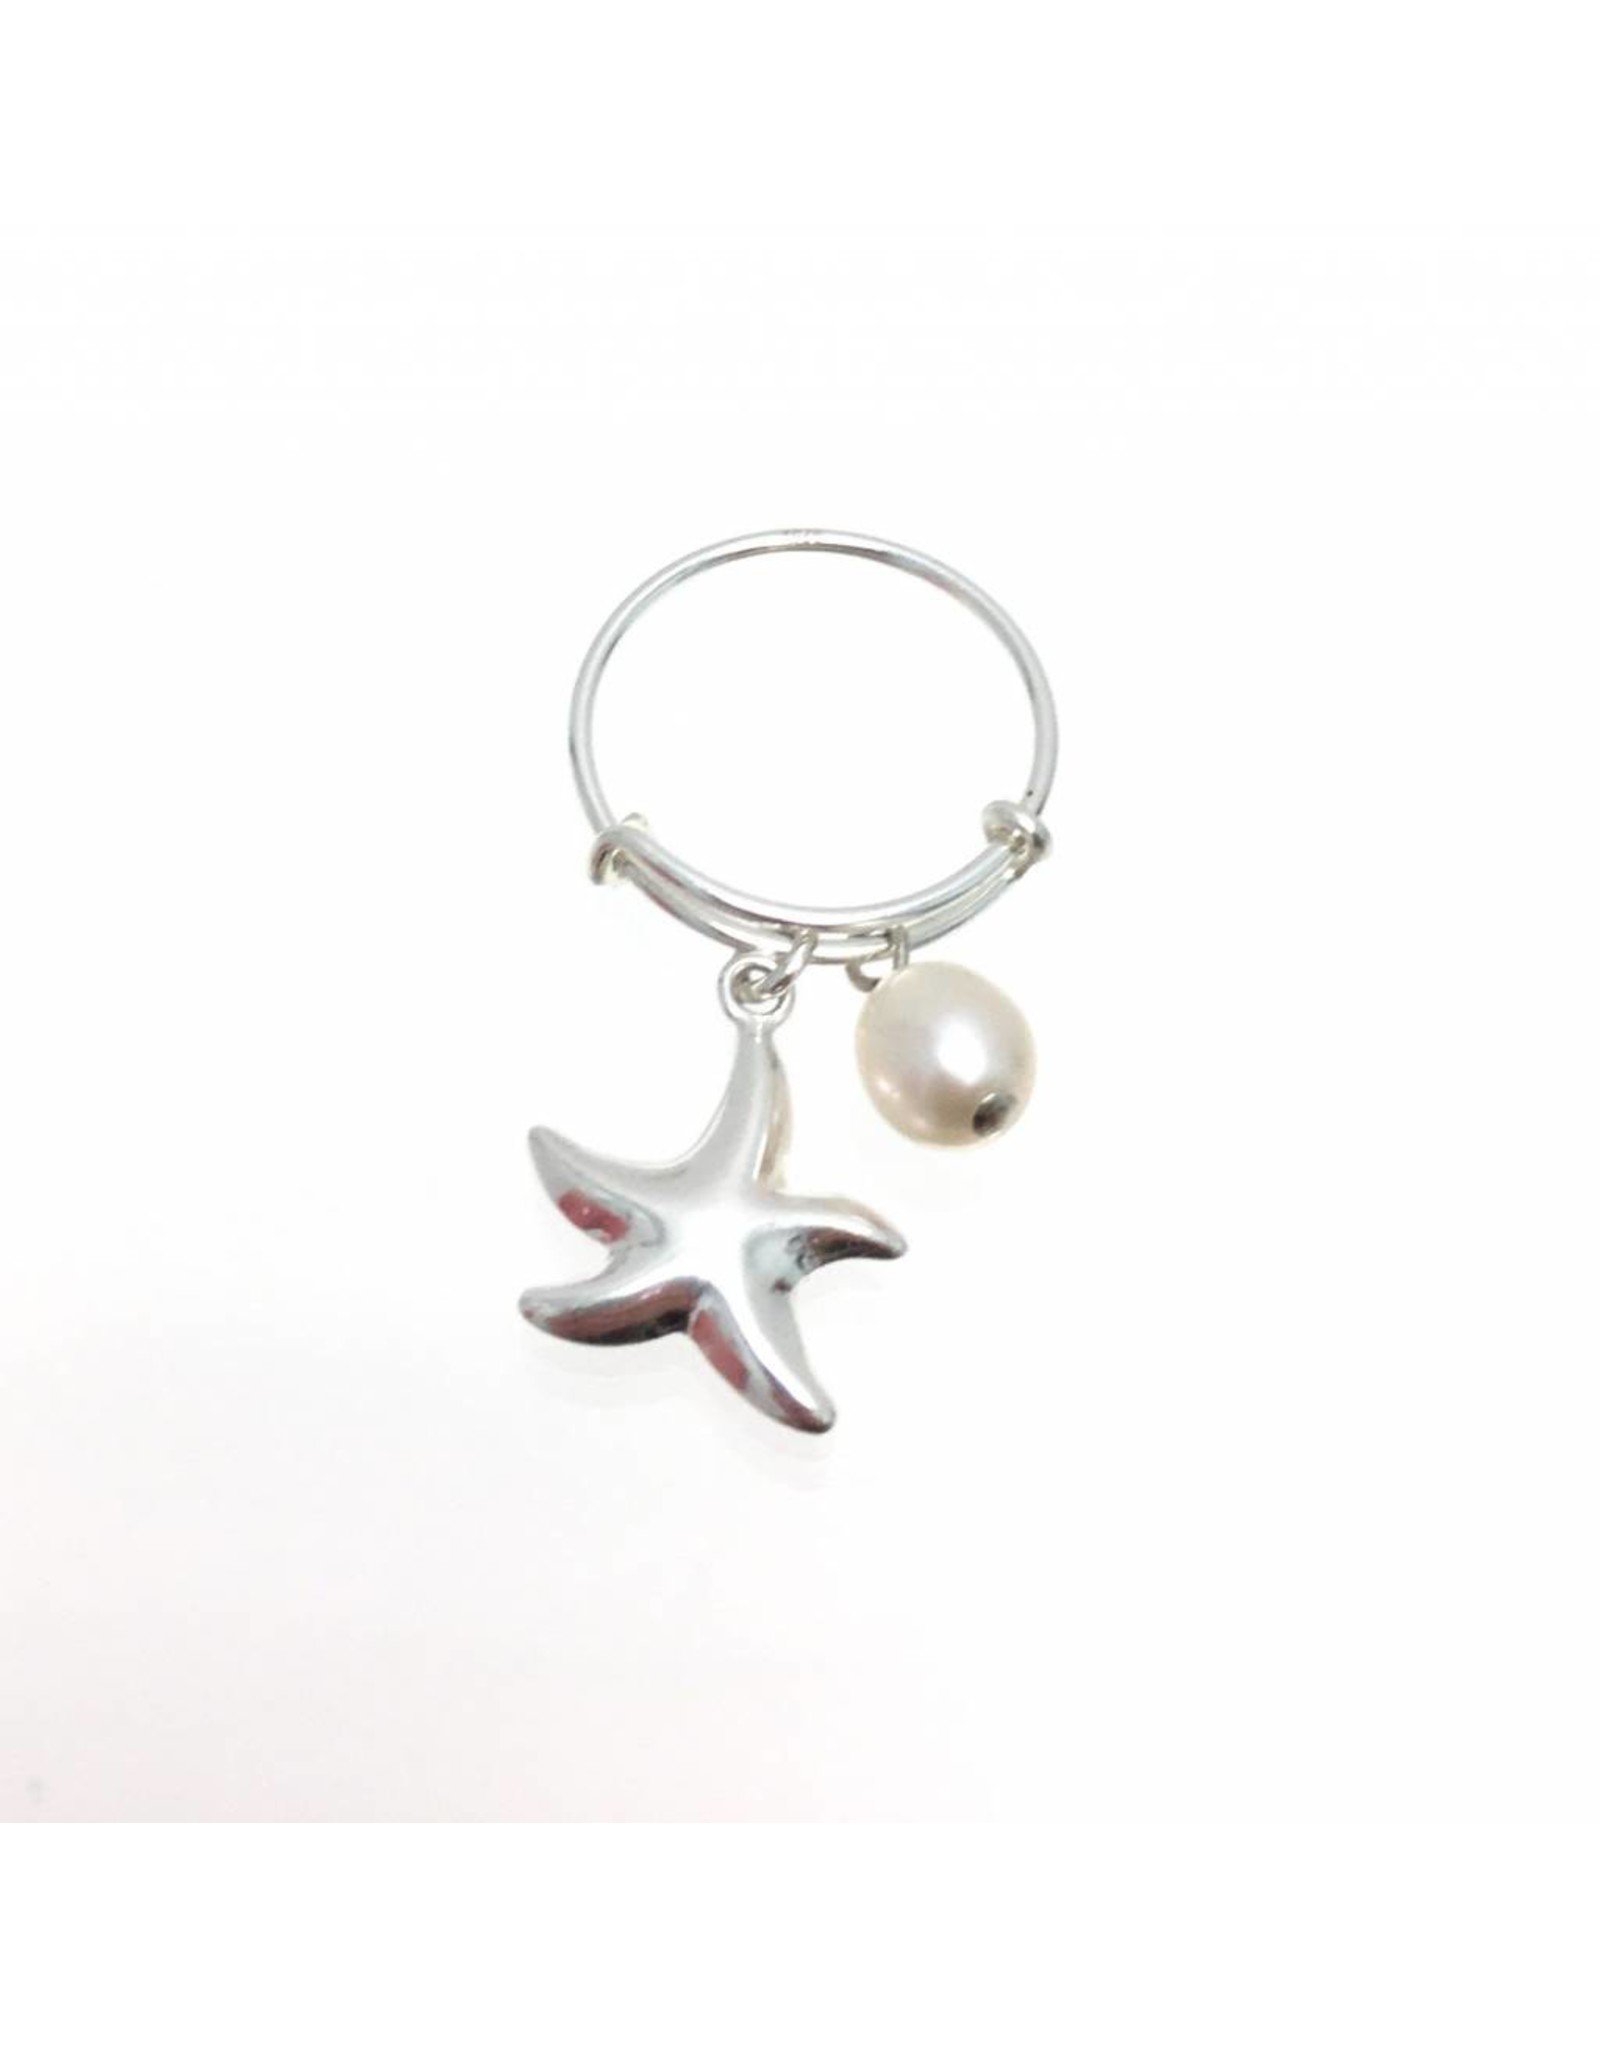 Starfish & pearl ring Size 6-8